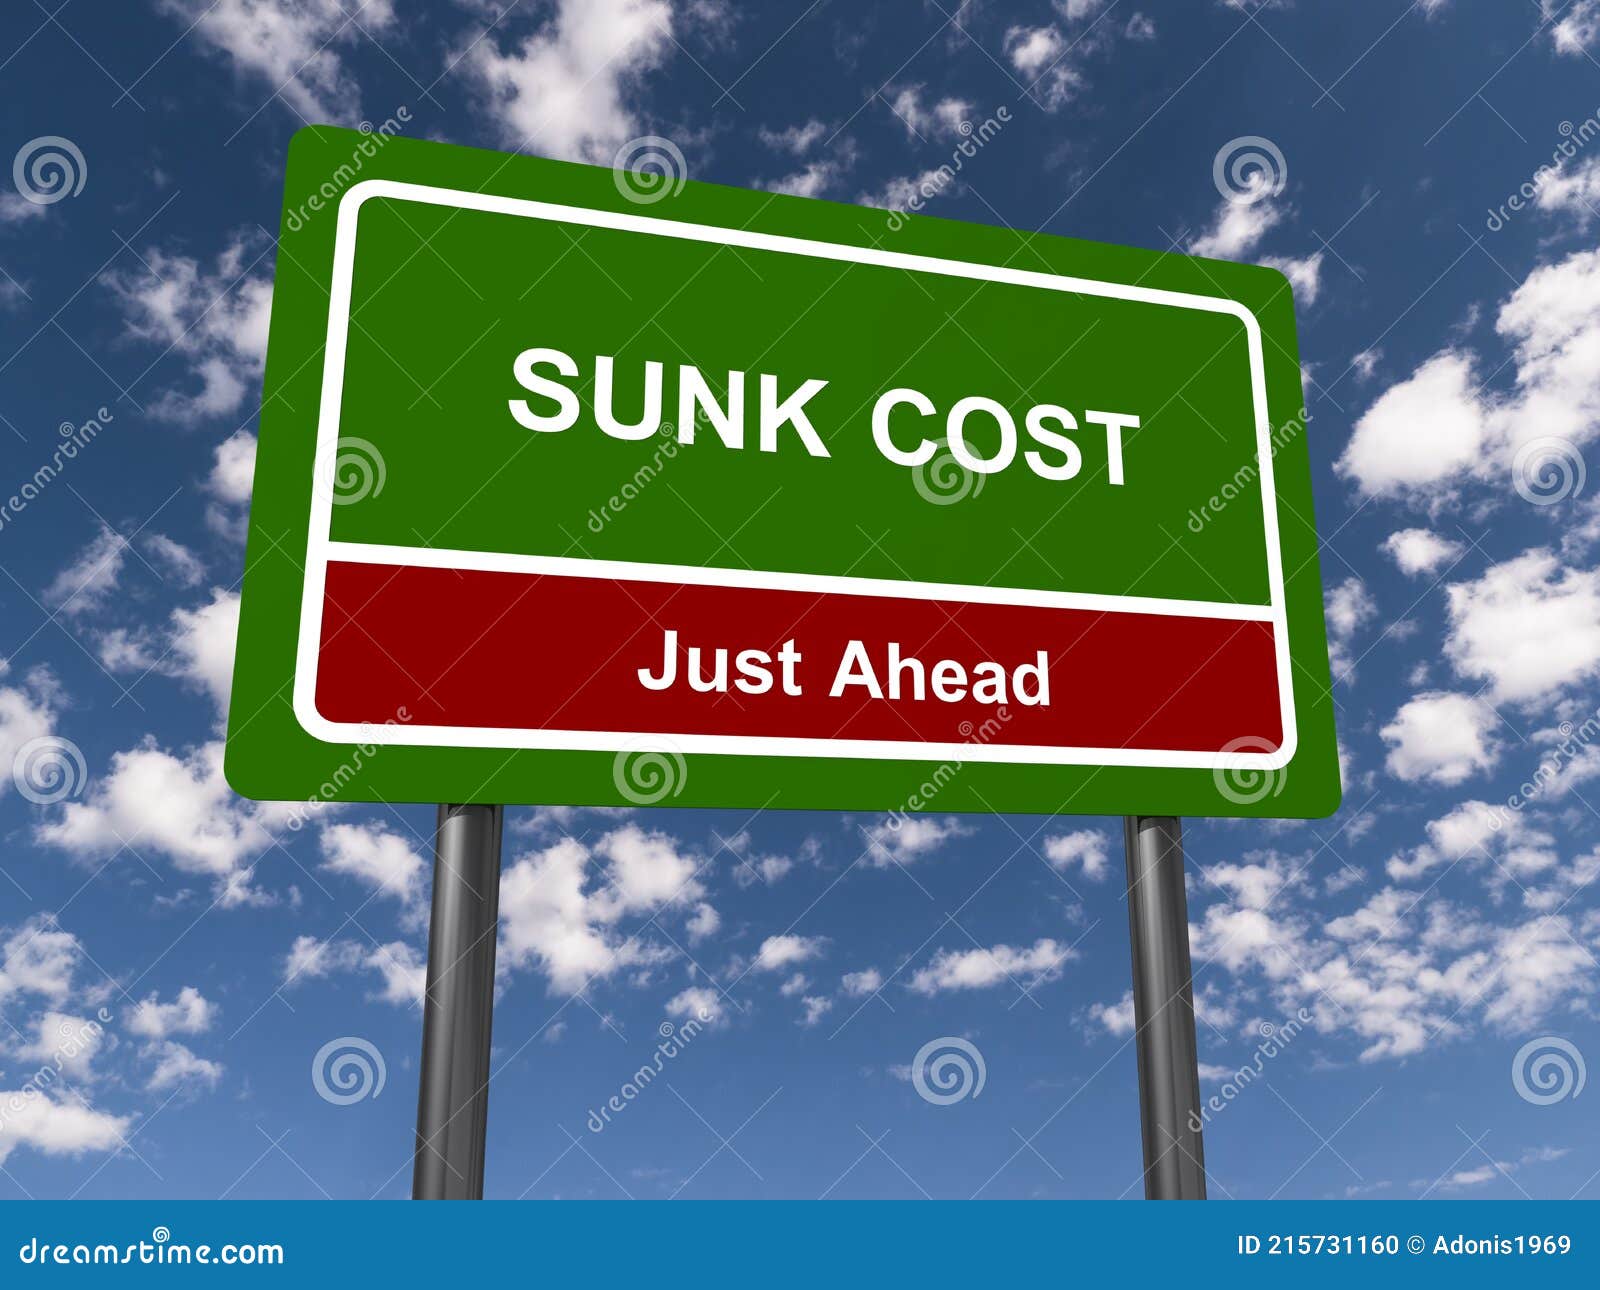 sunk cost traffic sign